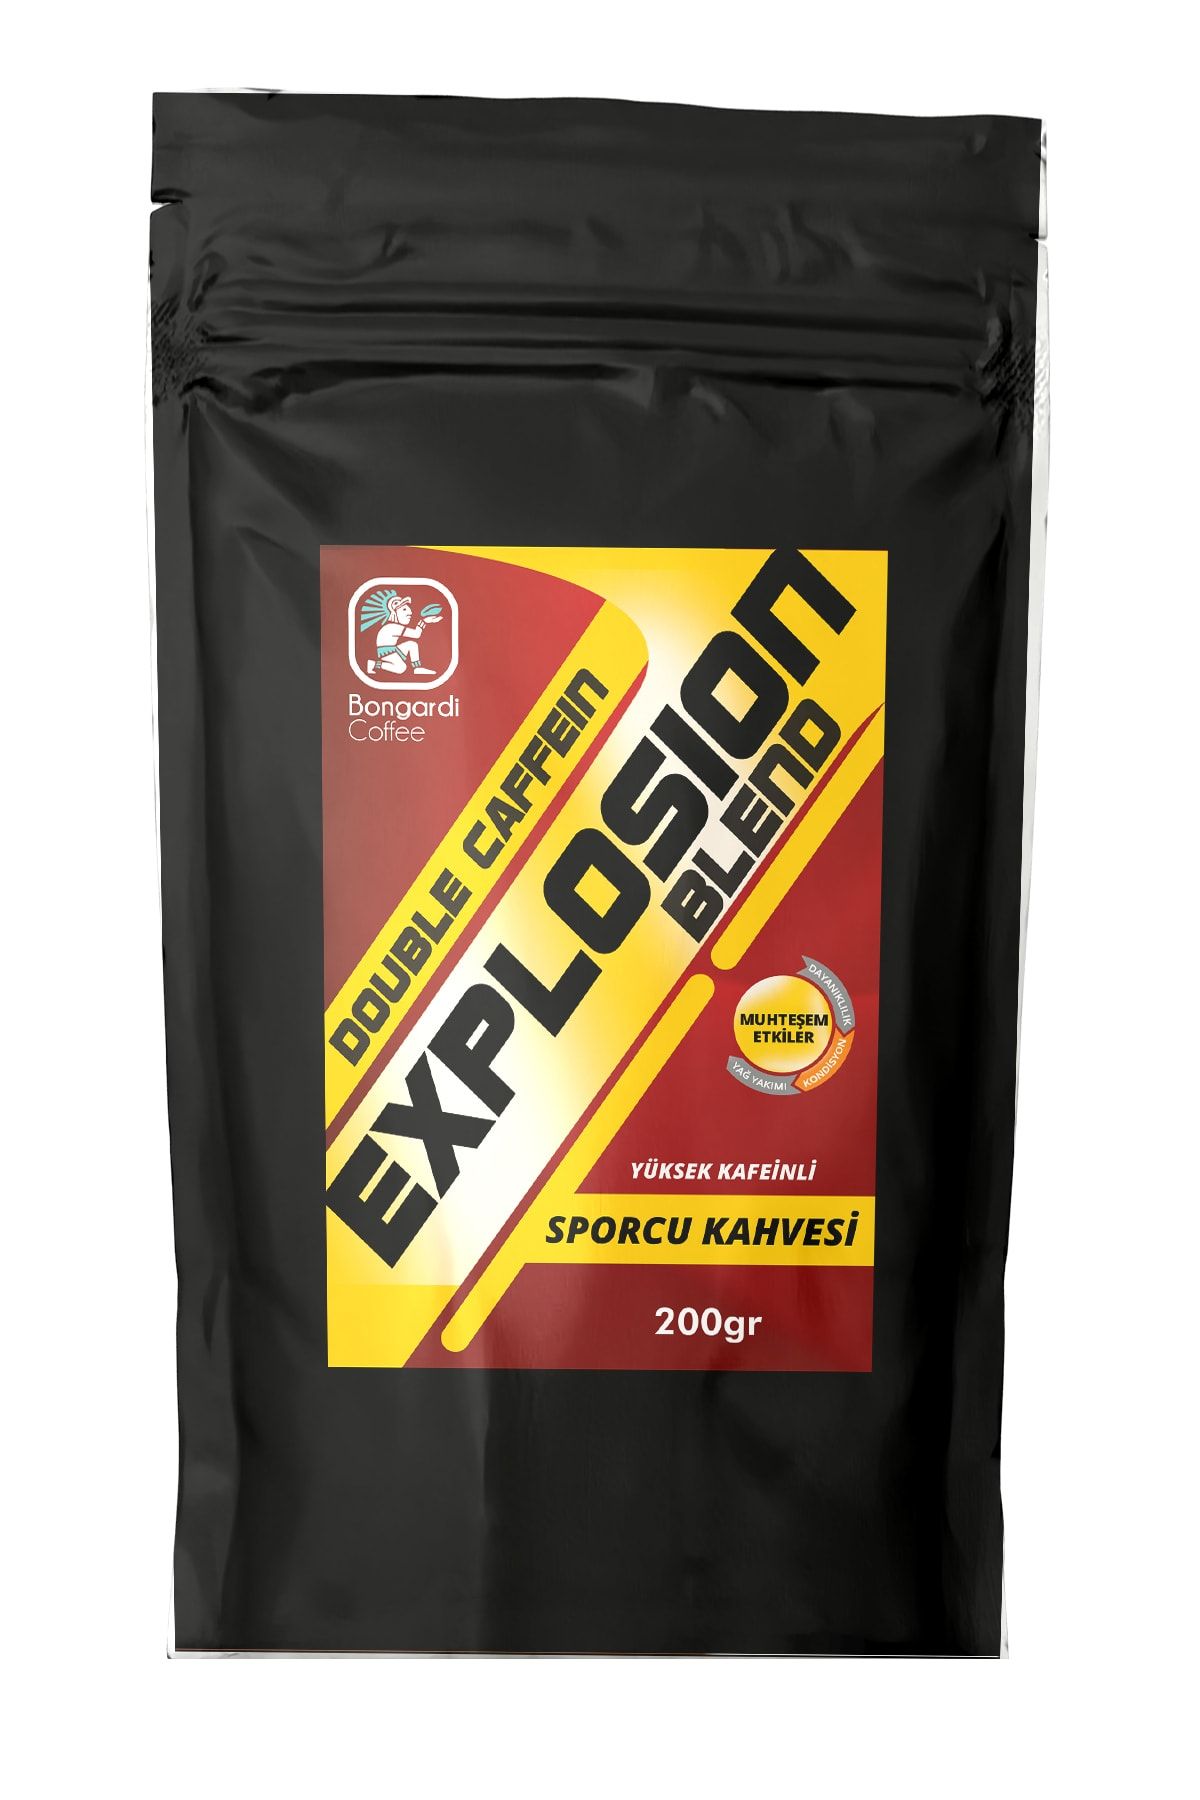 Bongardi Coffee 200 gram Sporcu Kahvesi Explosion Filtre Kahve Makinesi Uyumlu 2 Kat Kafeinli